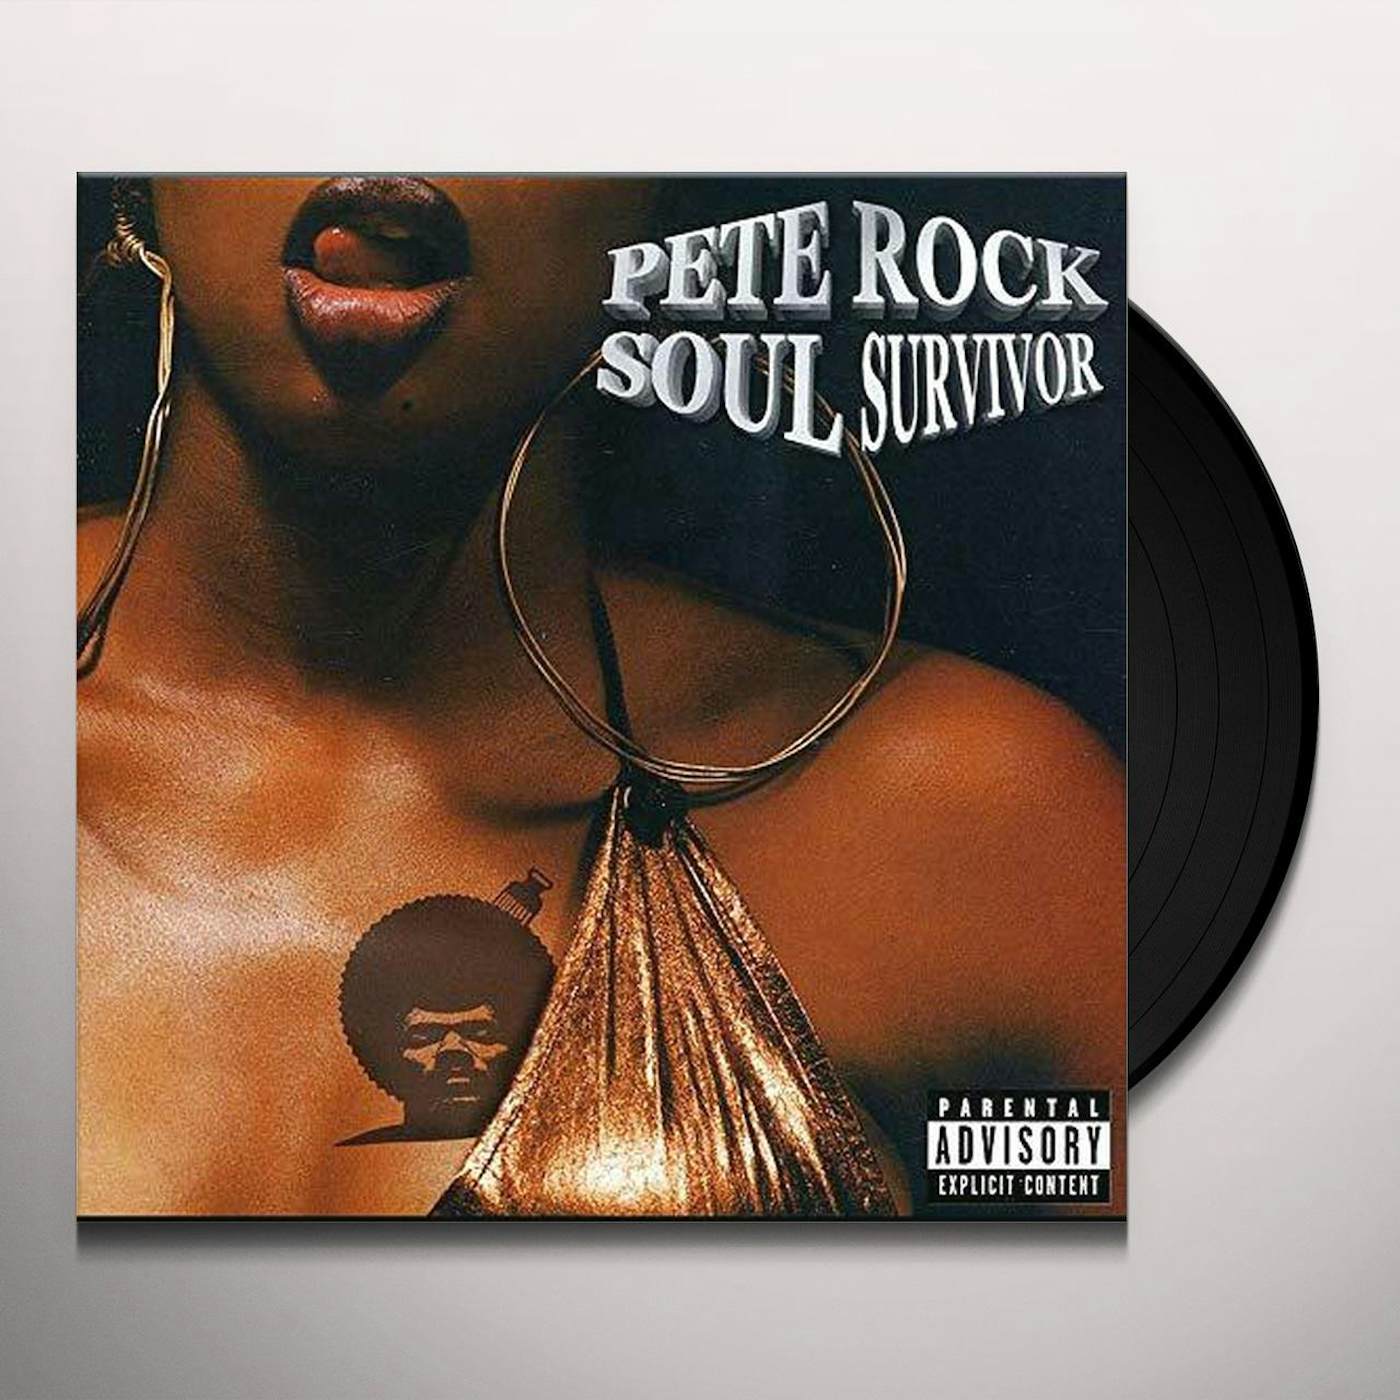 Pete Rock Soul Survivor Vinyl Record